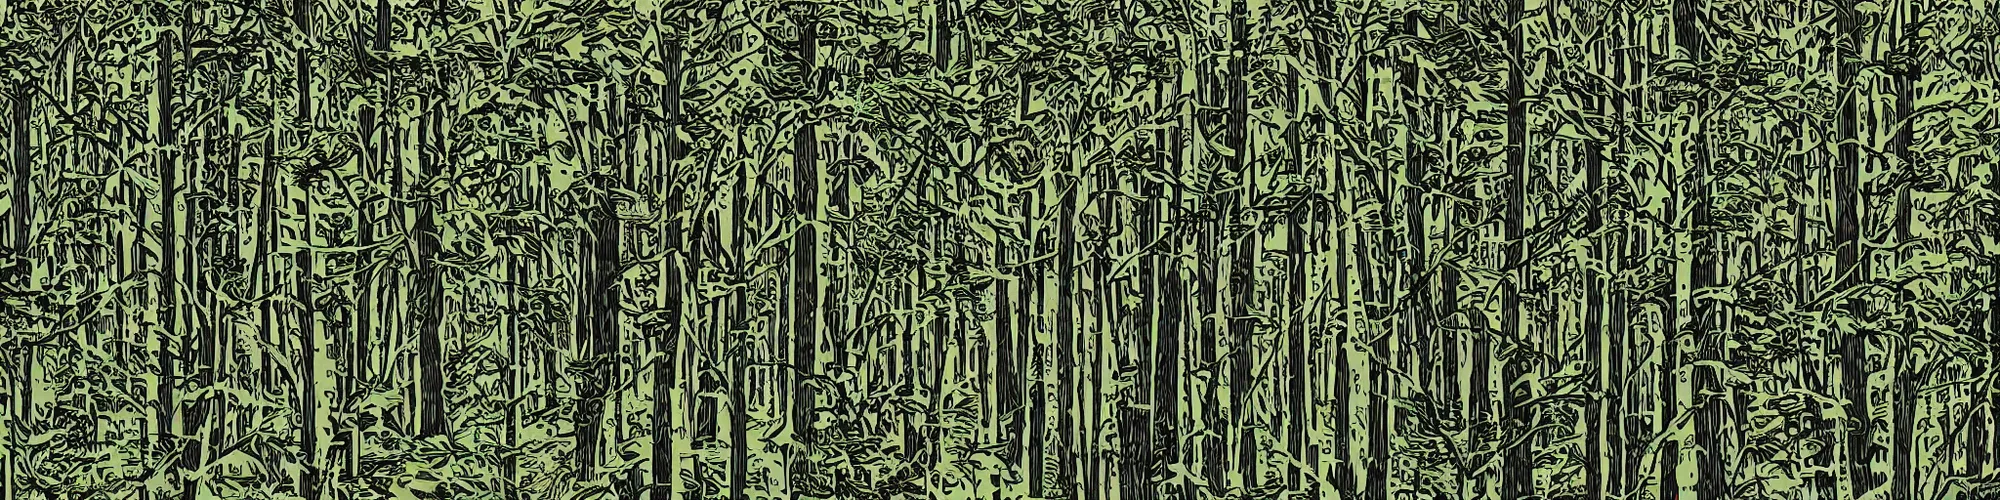 Prompt: a clean, forest landscape by shepard fairey, alpha bump